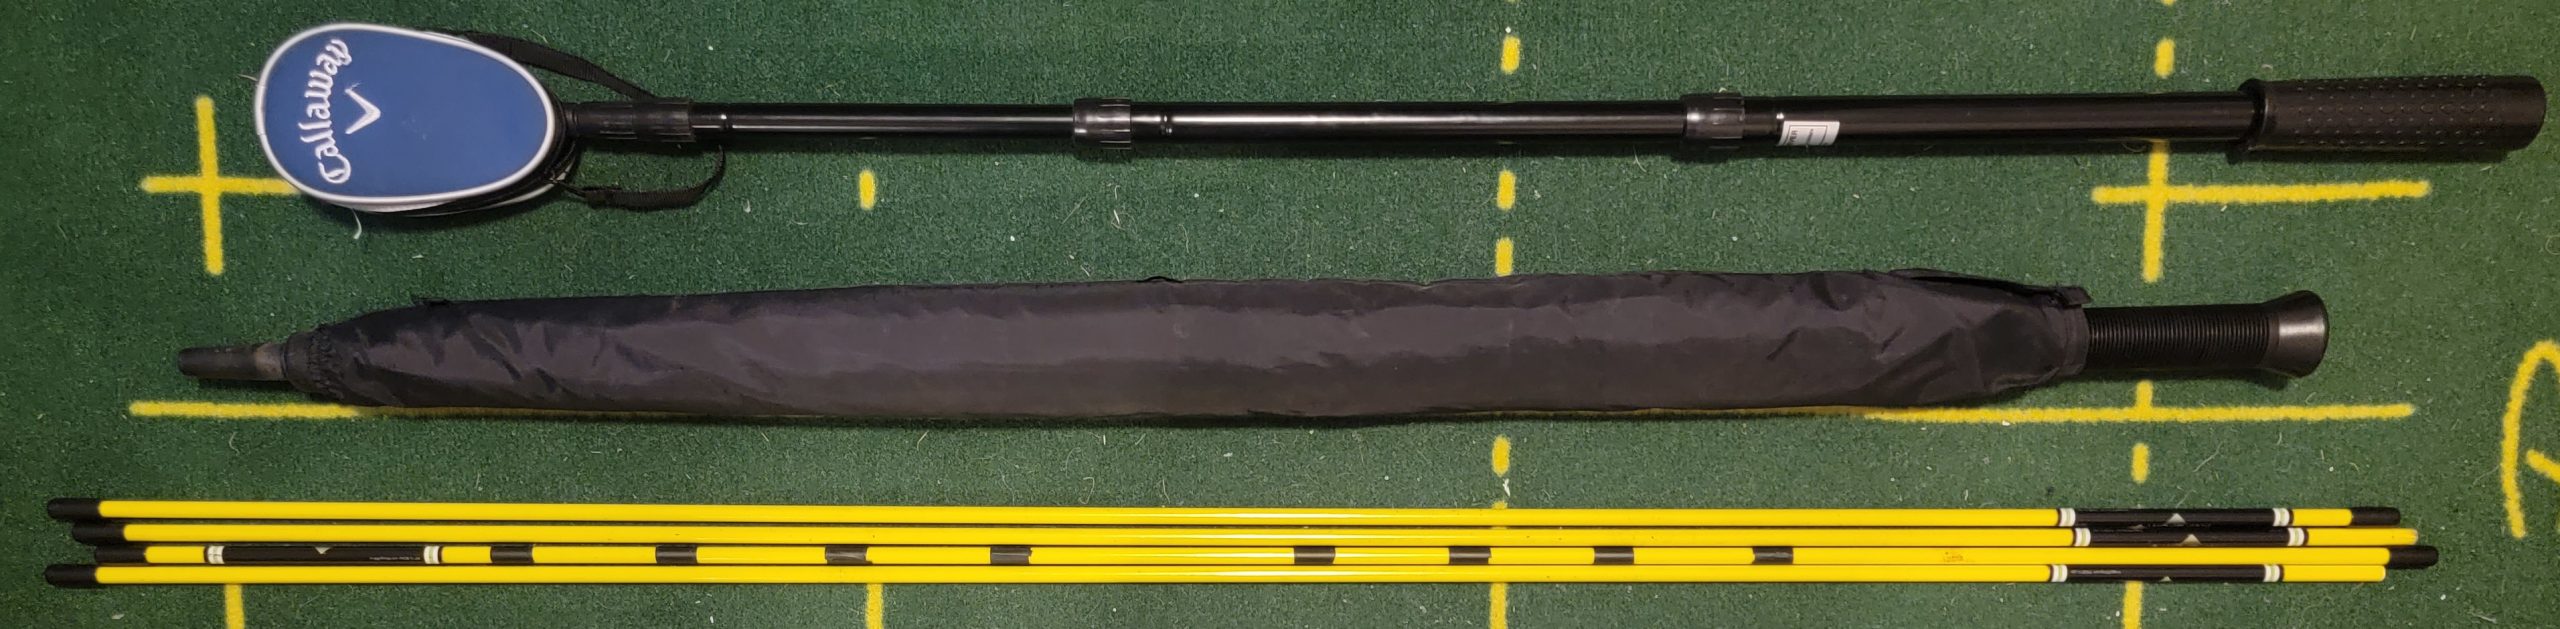 Old Duffer Golf image of a golf ball retriever, umbrella and alignment rods